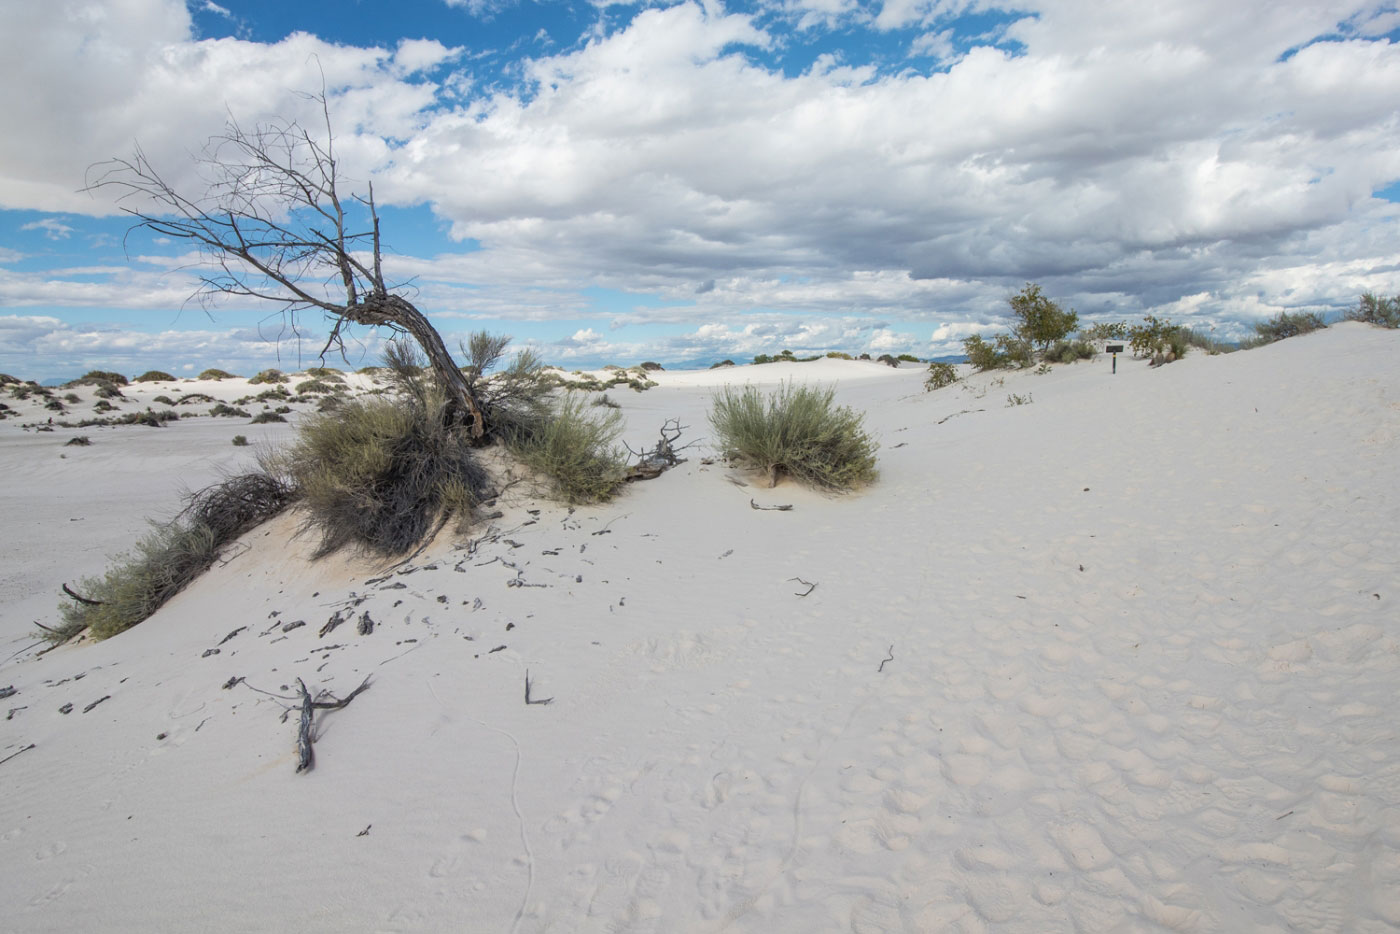 Stupell Indtries Beach Sand Dune Path Tall Grass Muted Sky,30 x 24